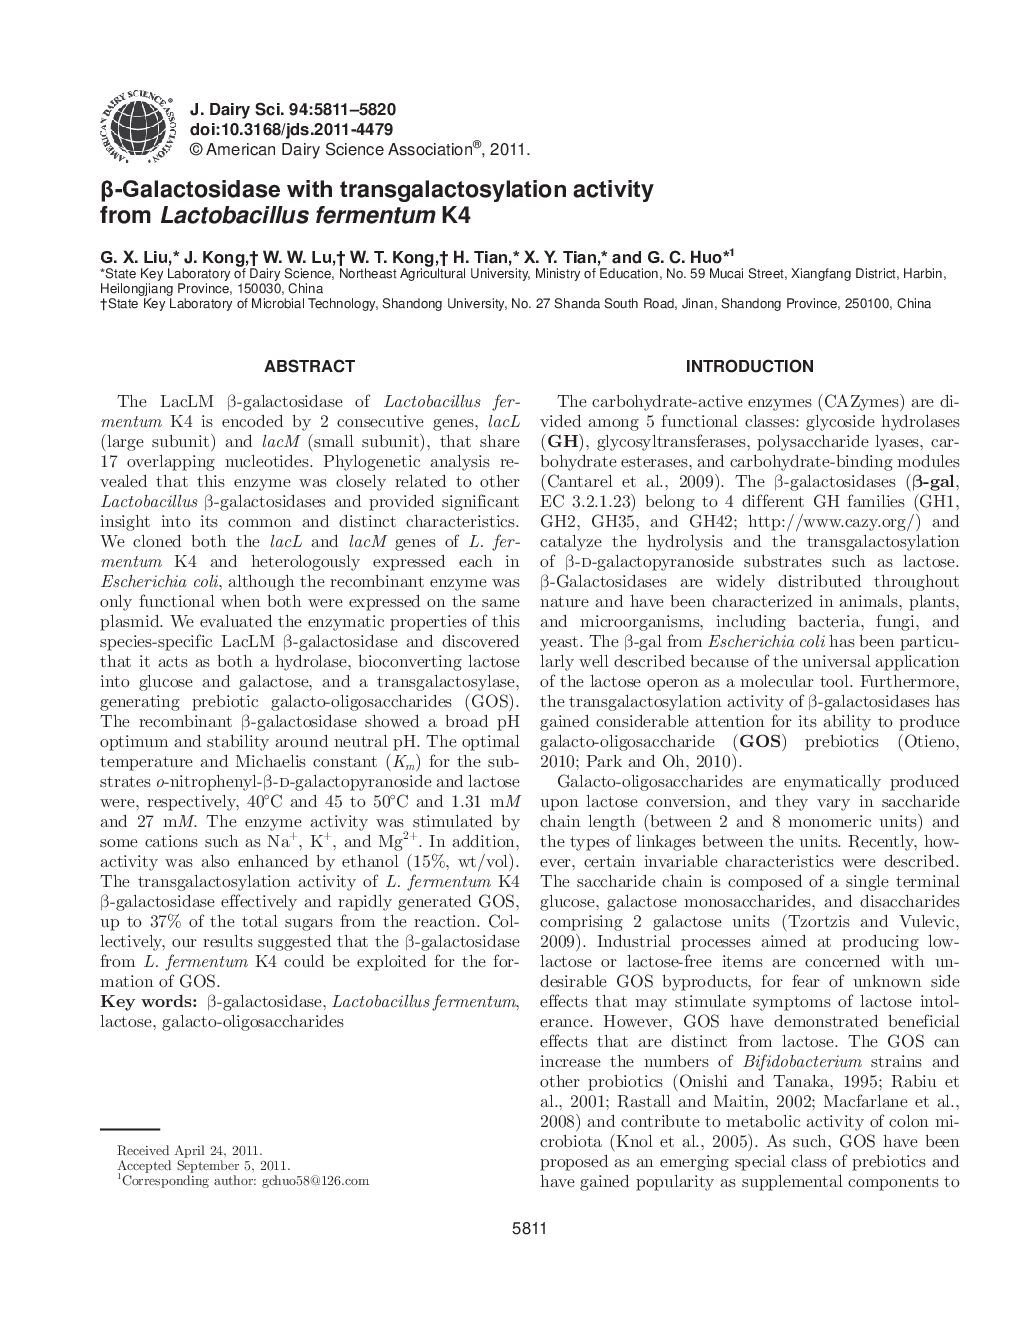 Î²-Galactosidase with transgalactosylation activity from Lactobacillus fermentum K4